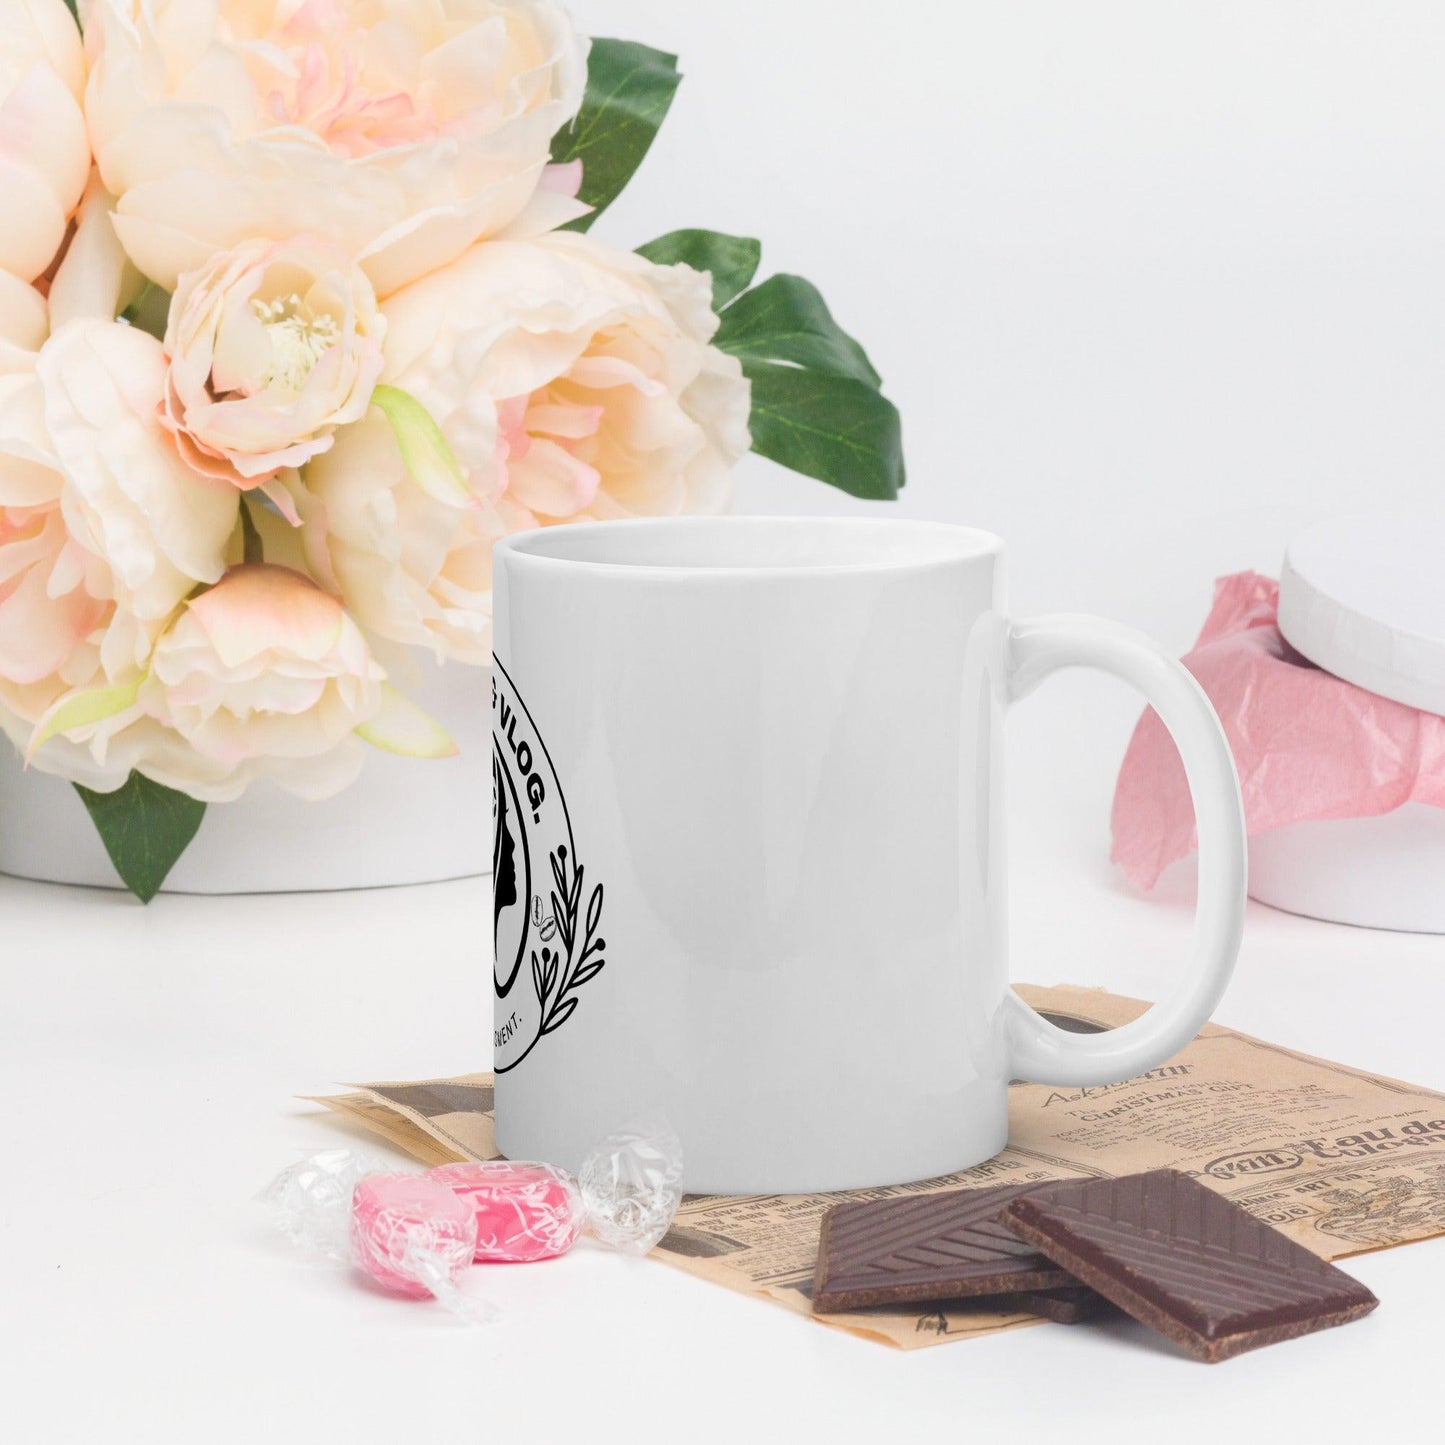 Minimalist White Coffee and Vlog Glossy Mug Gift - COFFEEBRE